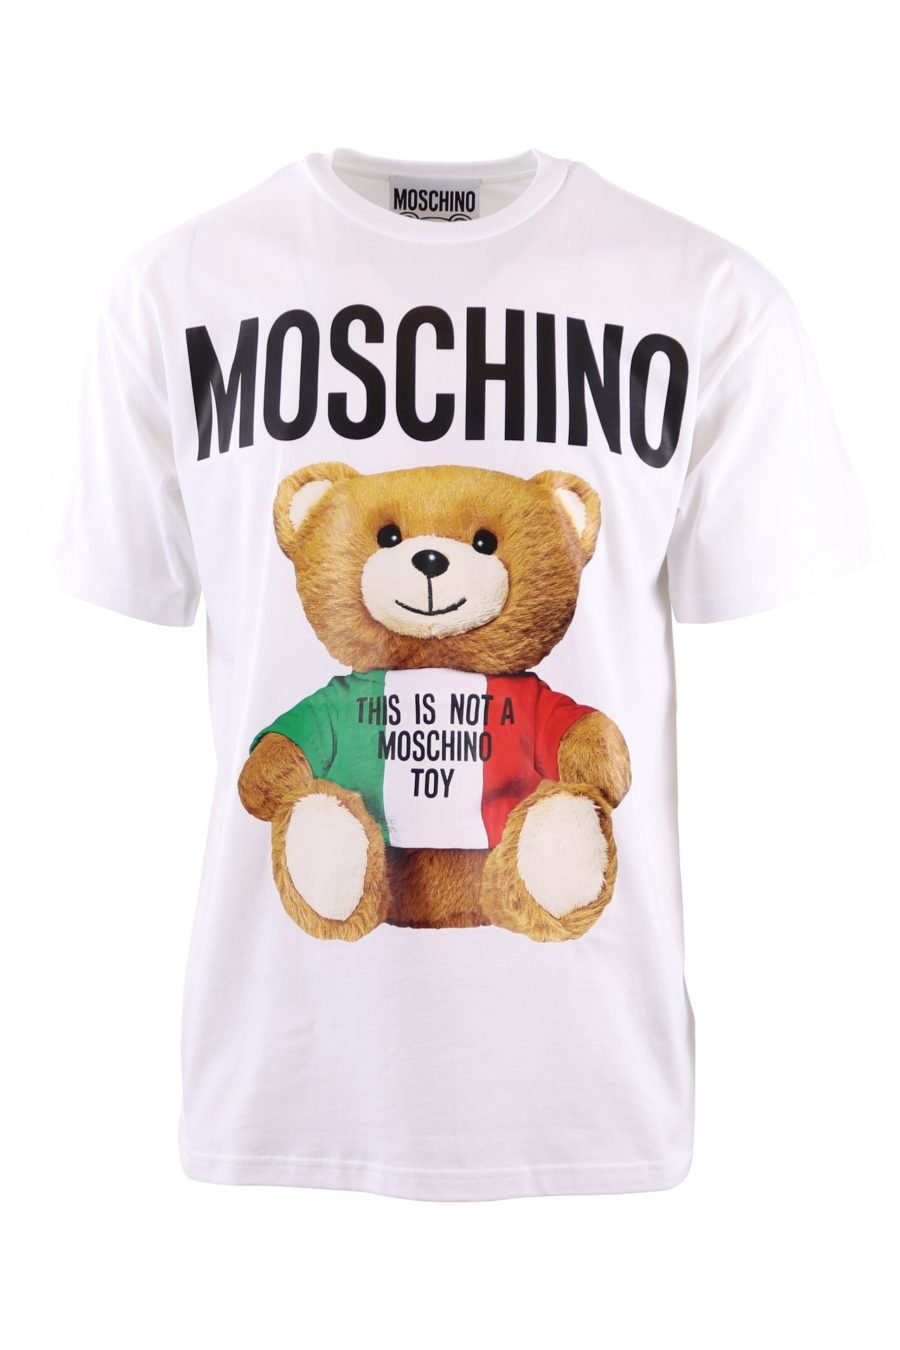 Moschino Couture T-shirt blanc oversize avec gros ours - bc685390dd4534e751af4e4b5cb56dcd1c567e1a